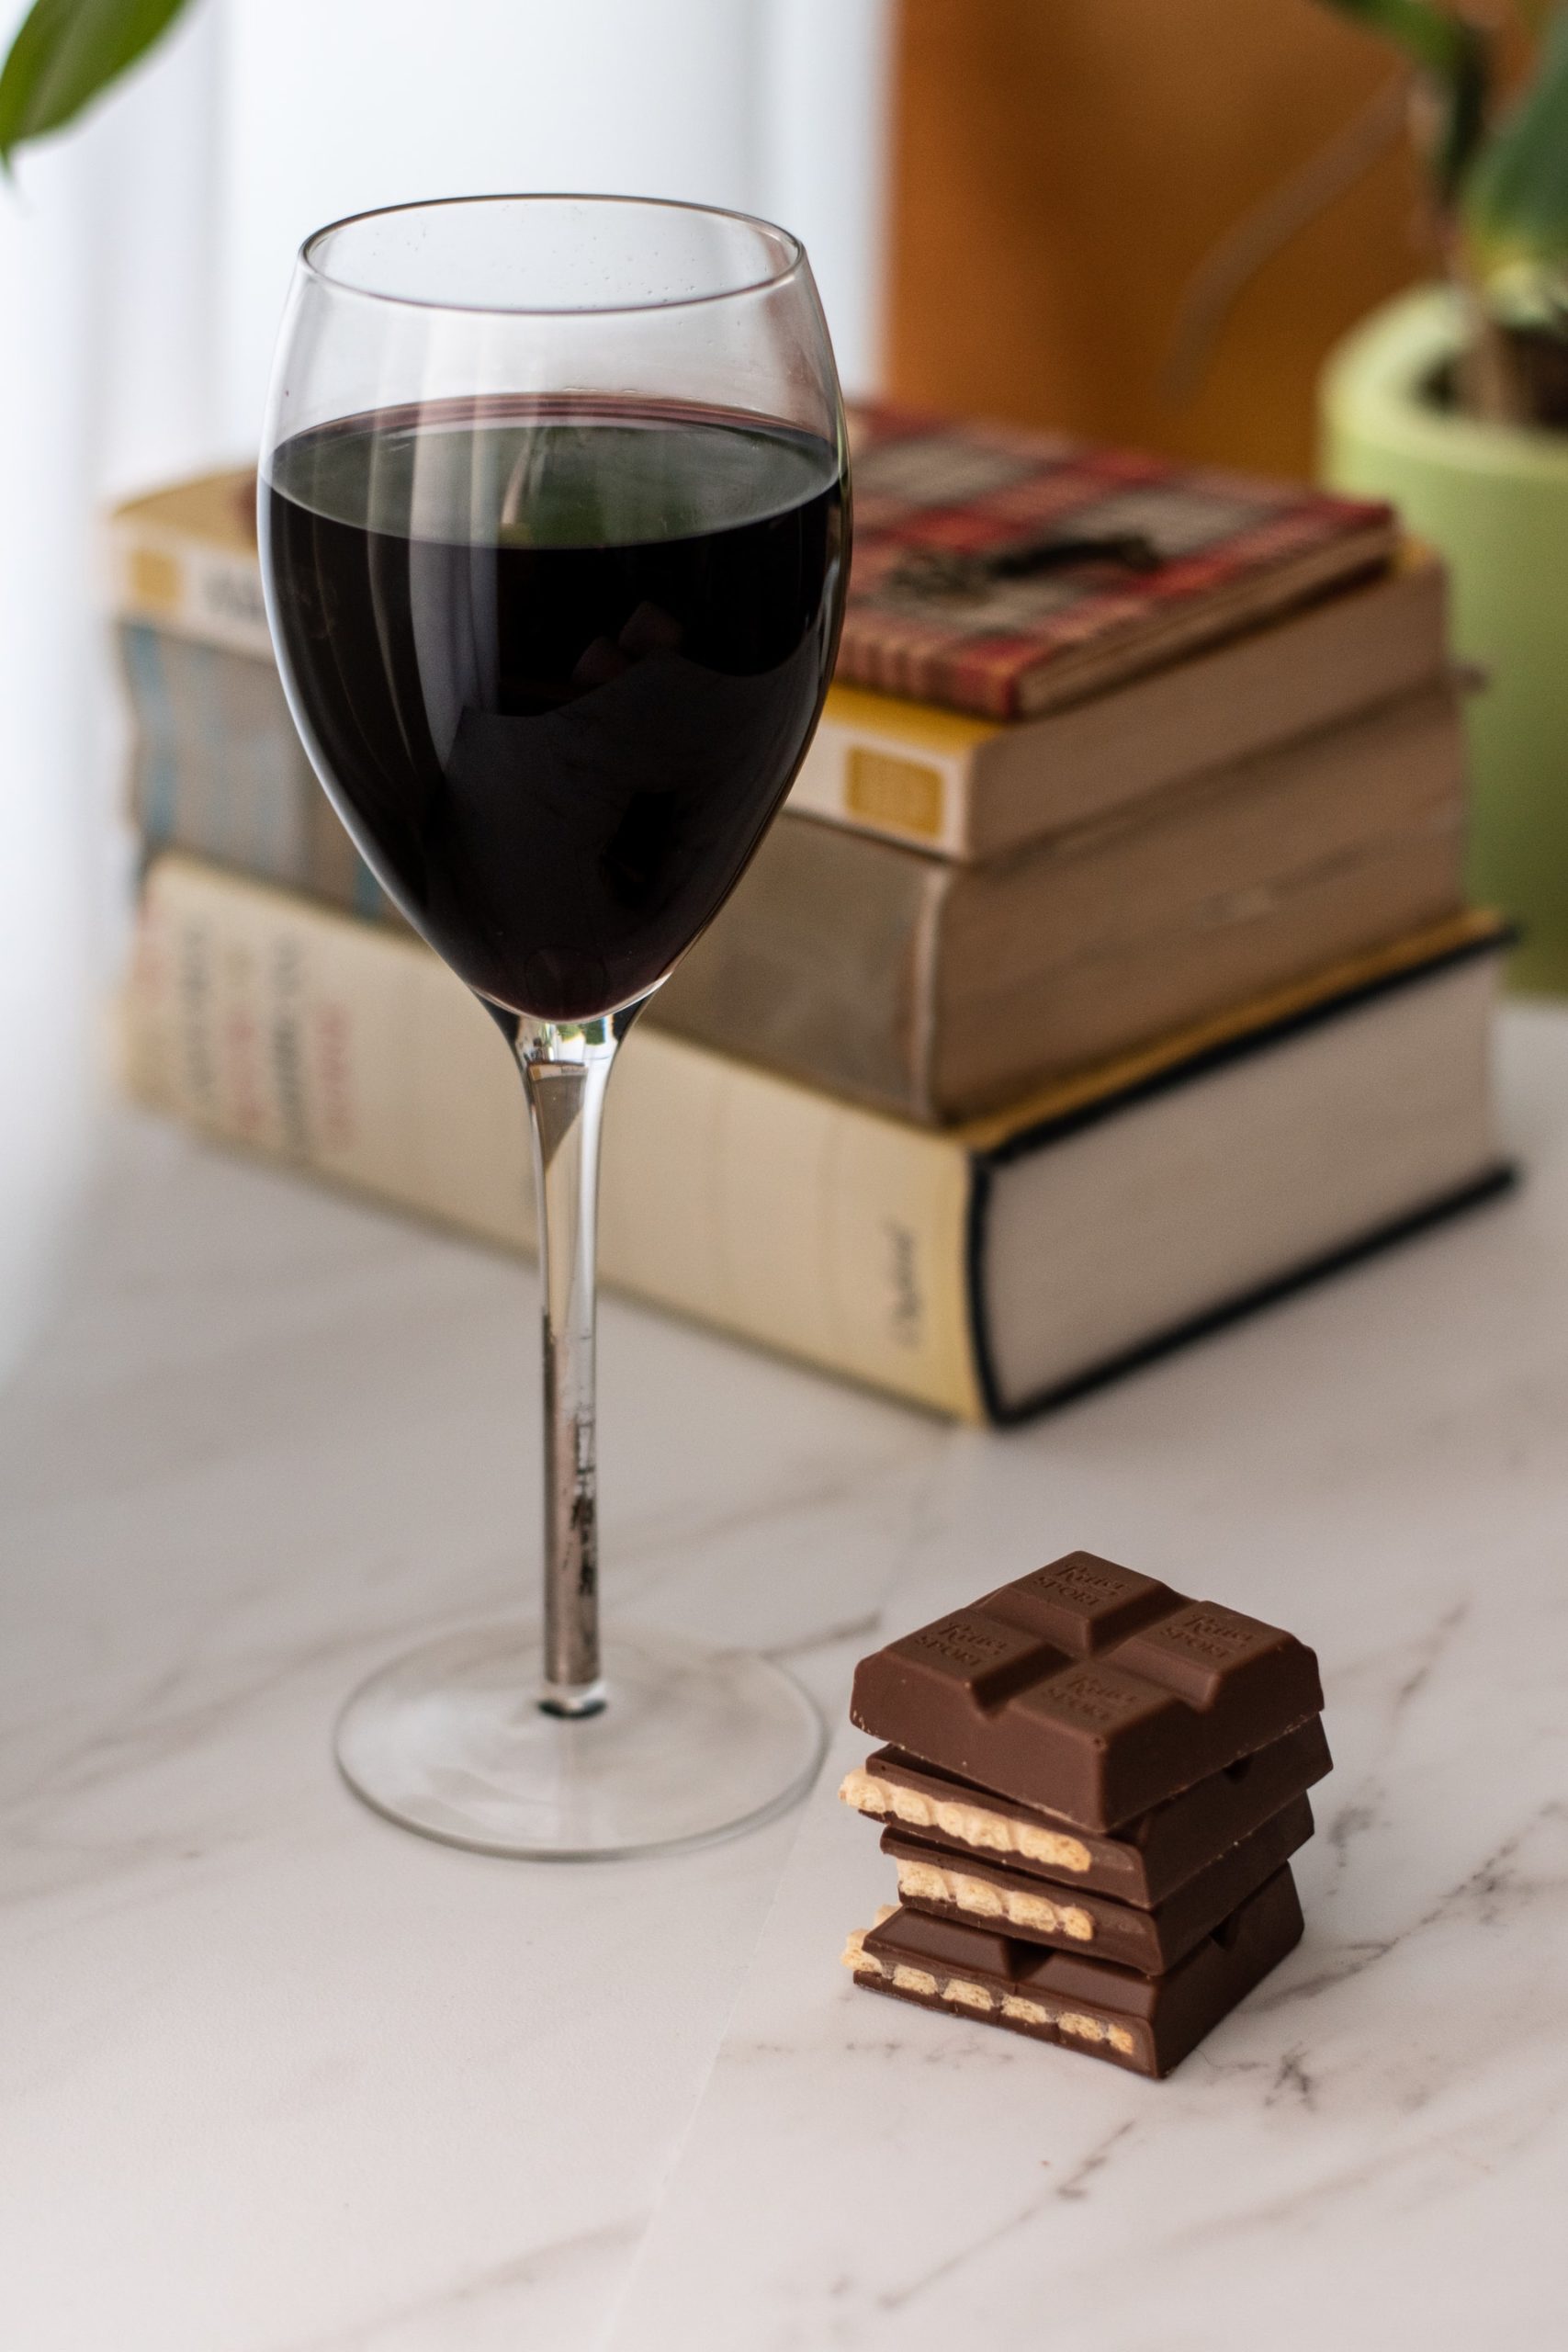 Wine Chocolate Pairing: 7 Steps To An Amazing Dessert